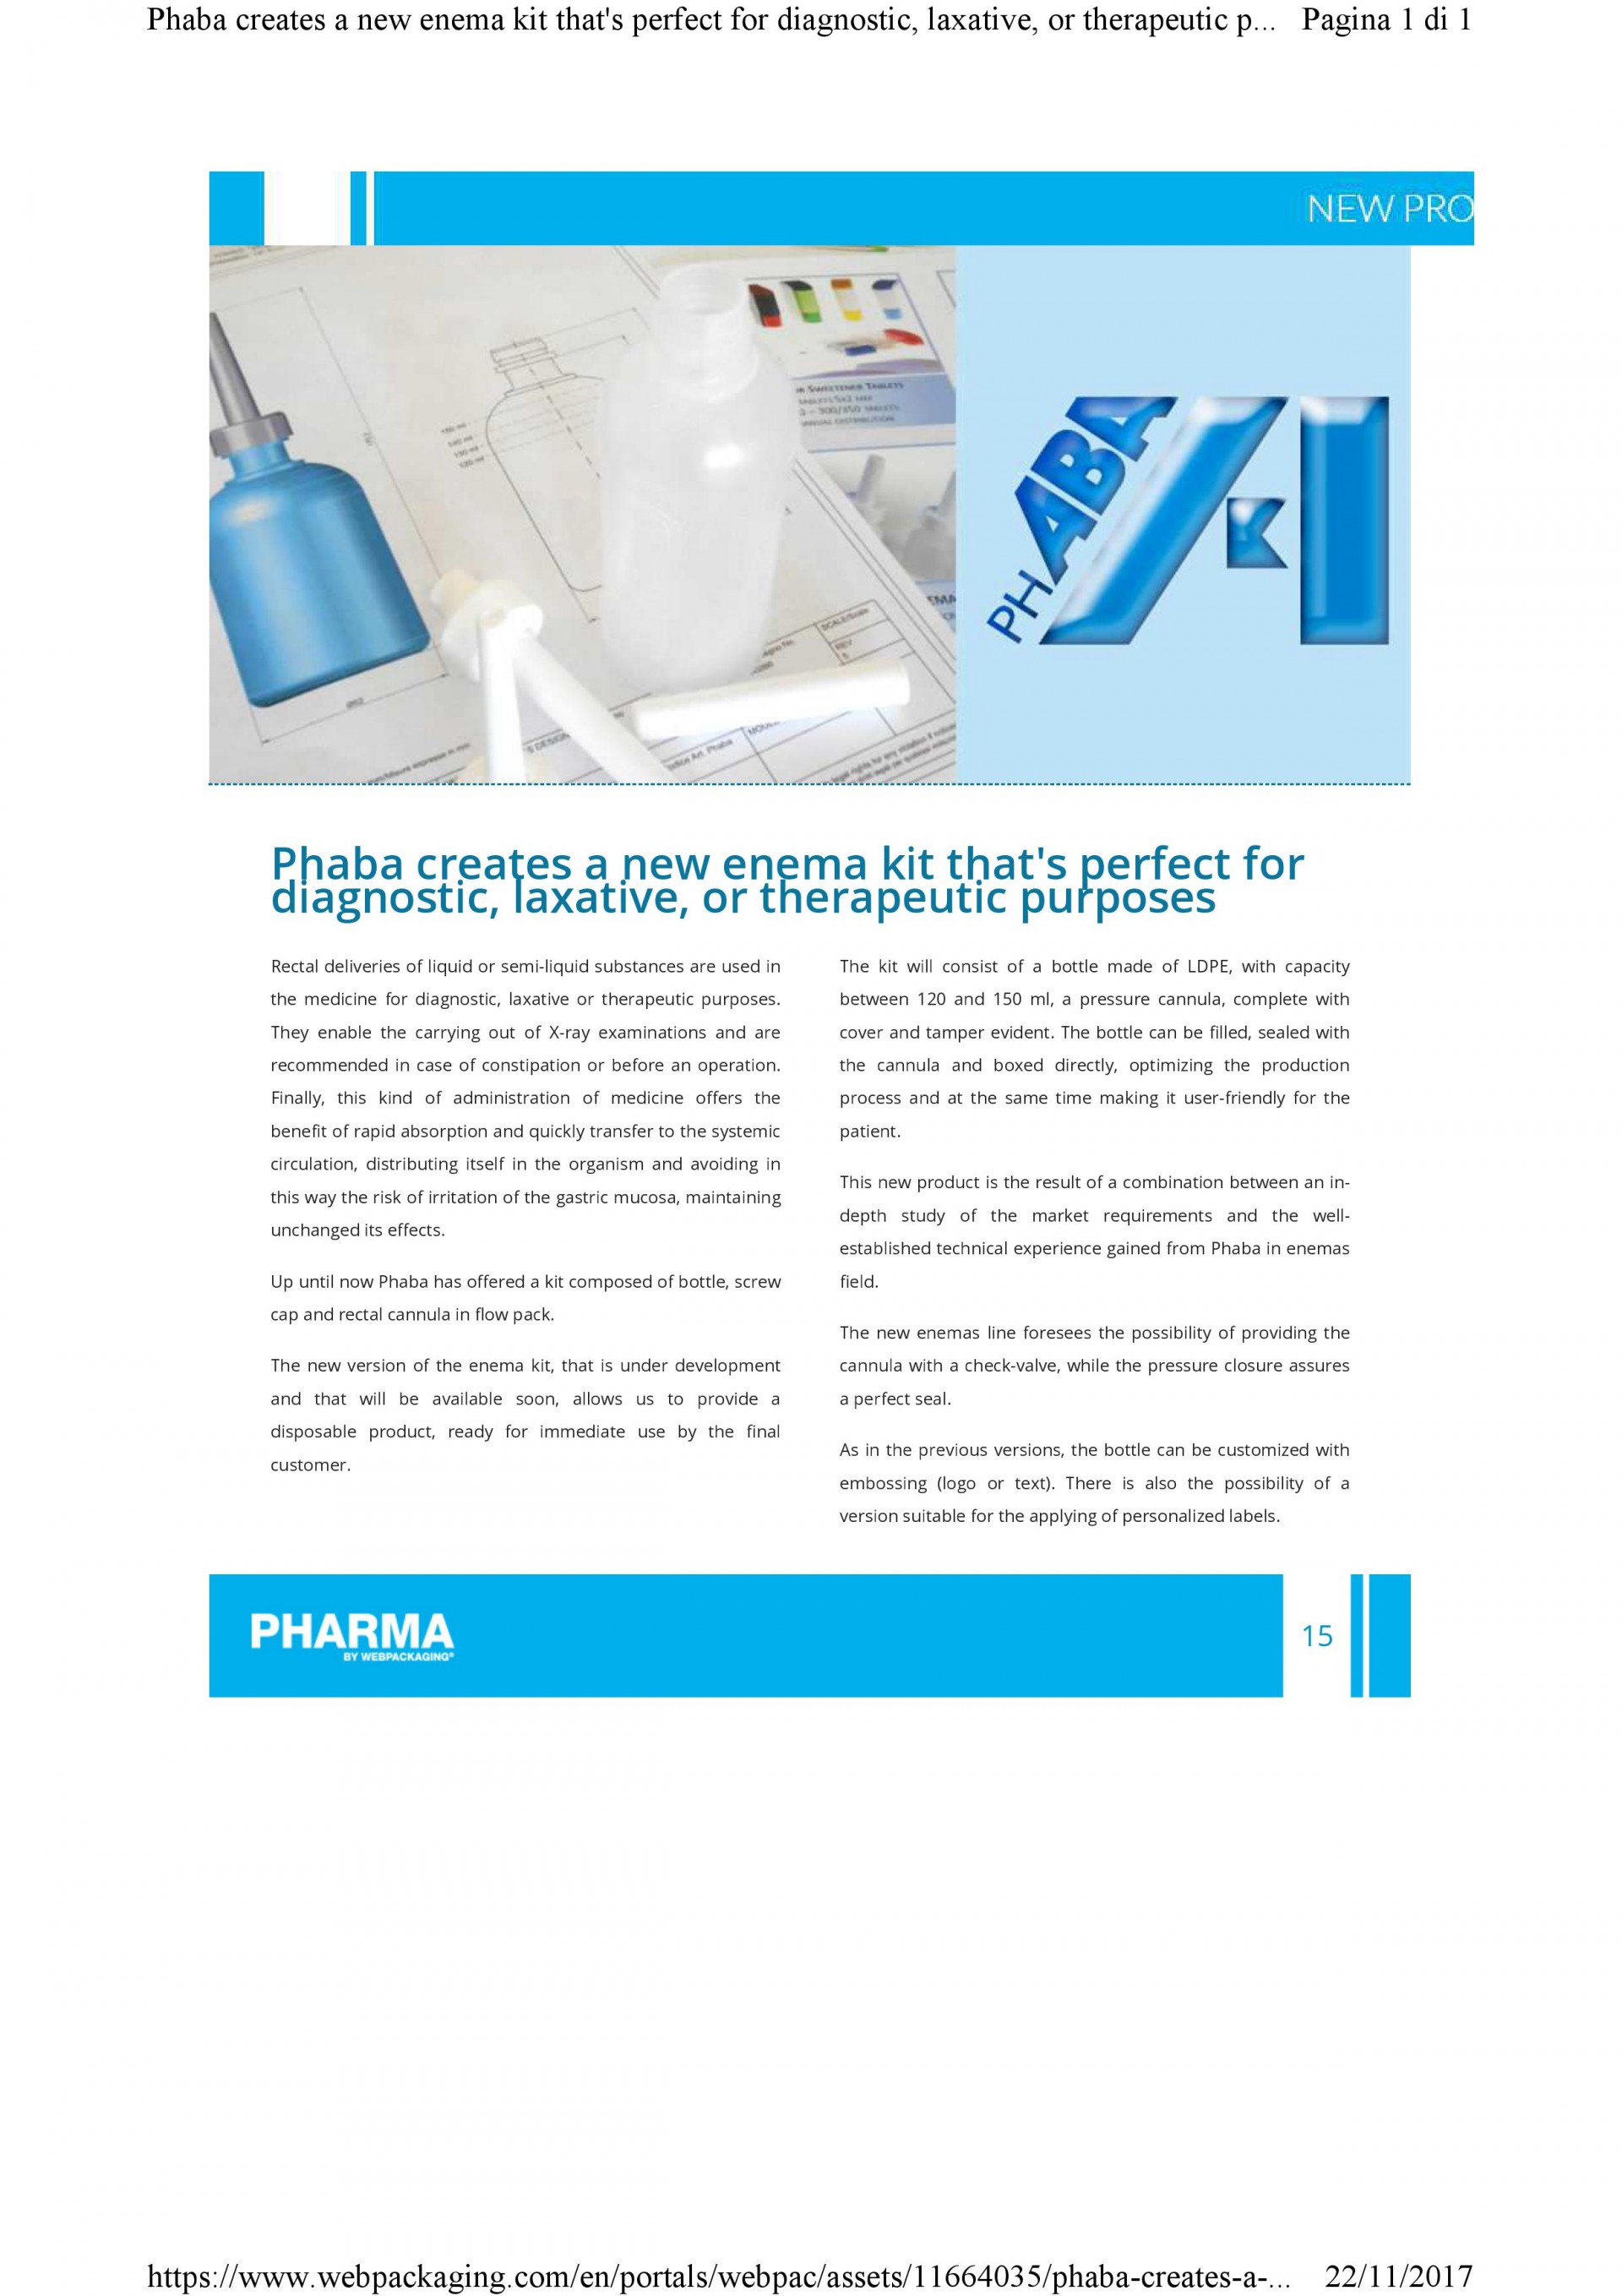 Phaba on the magazine “Pharma” by Webpackaging